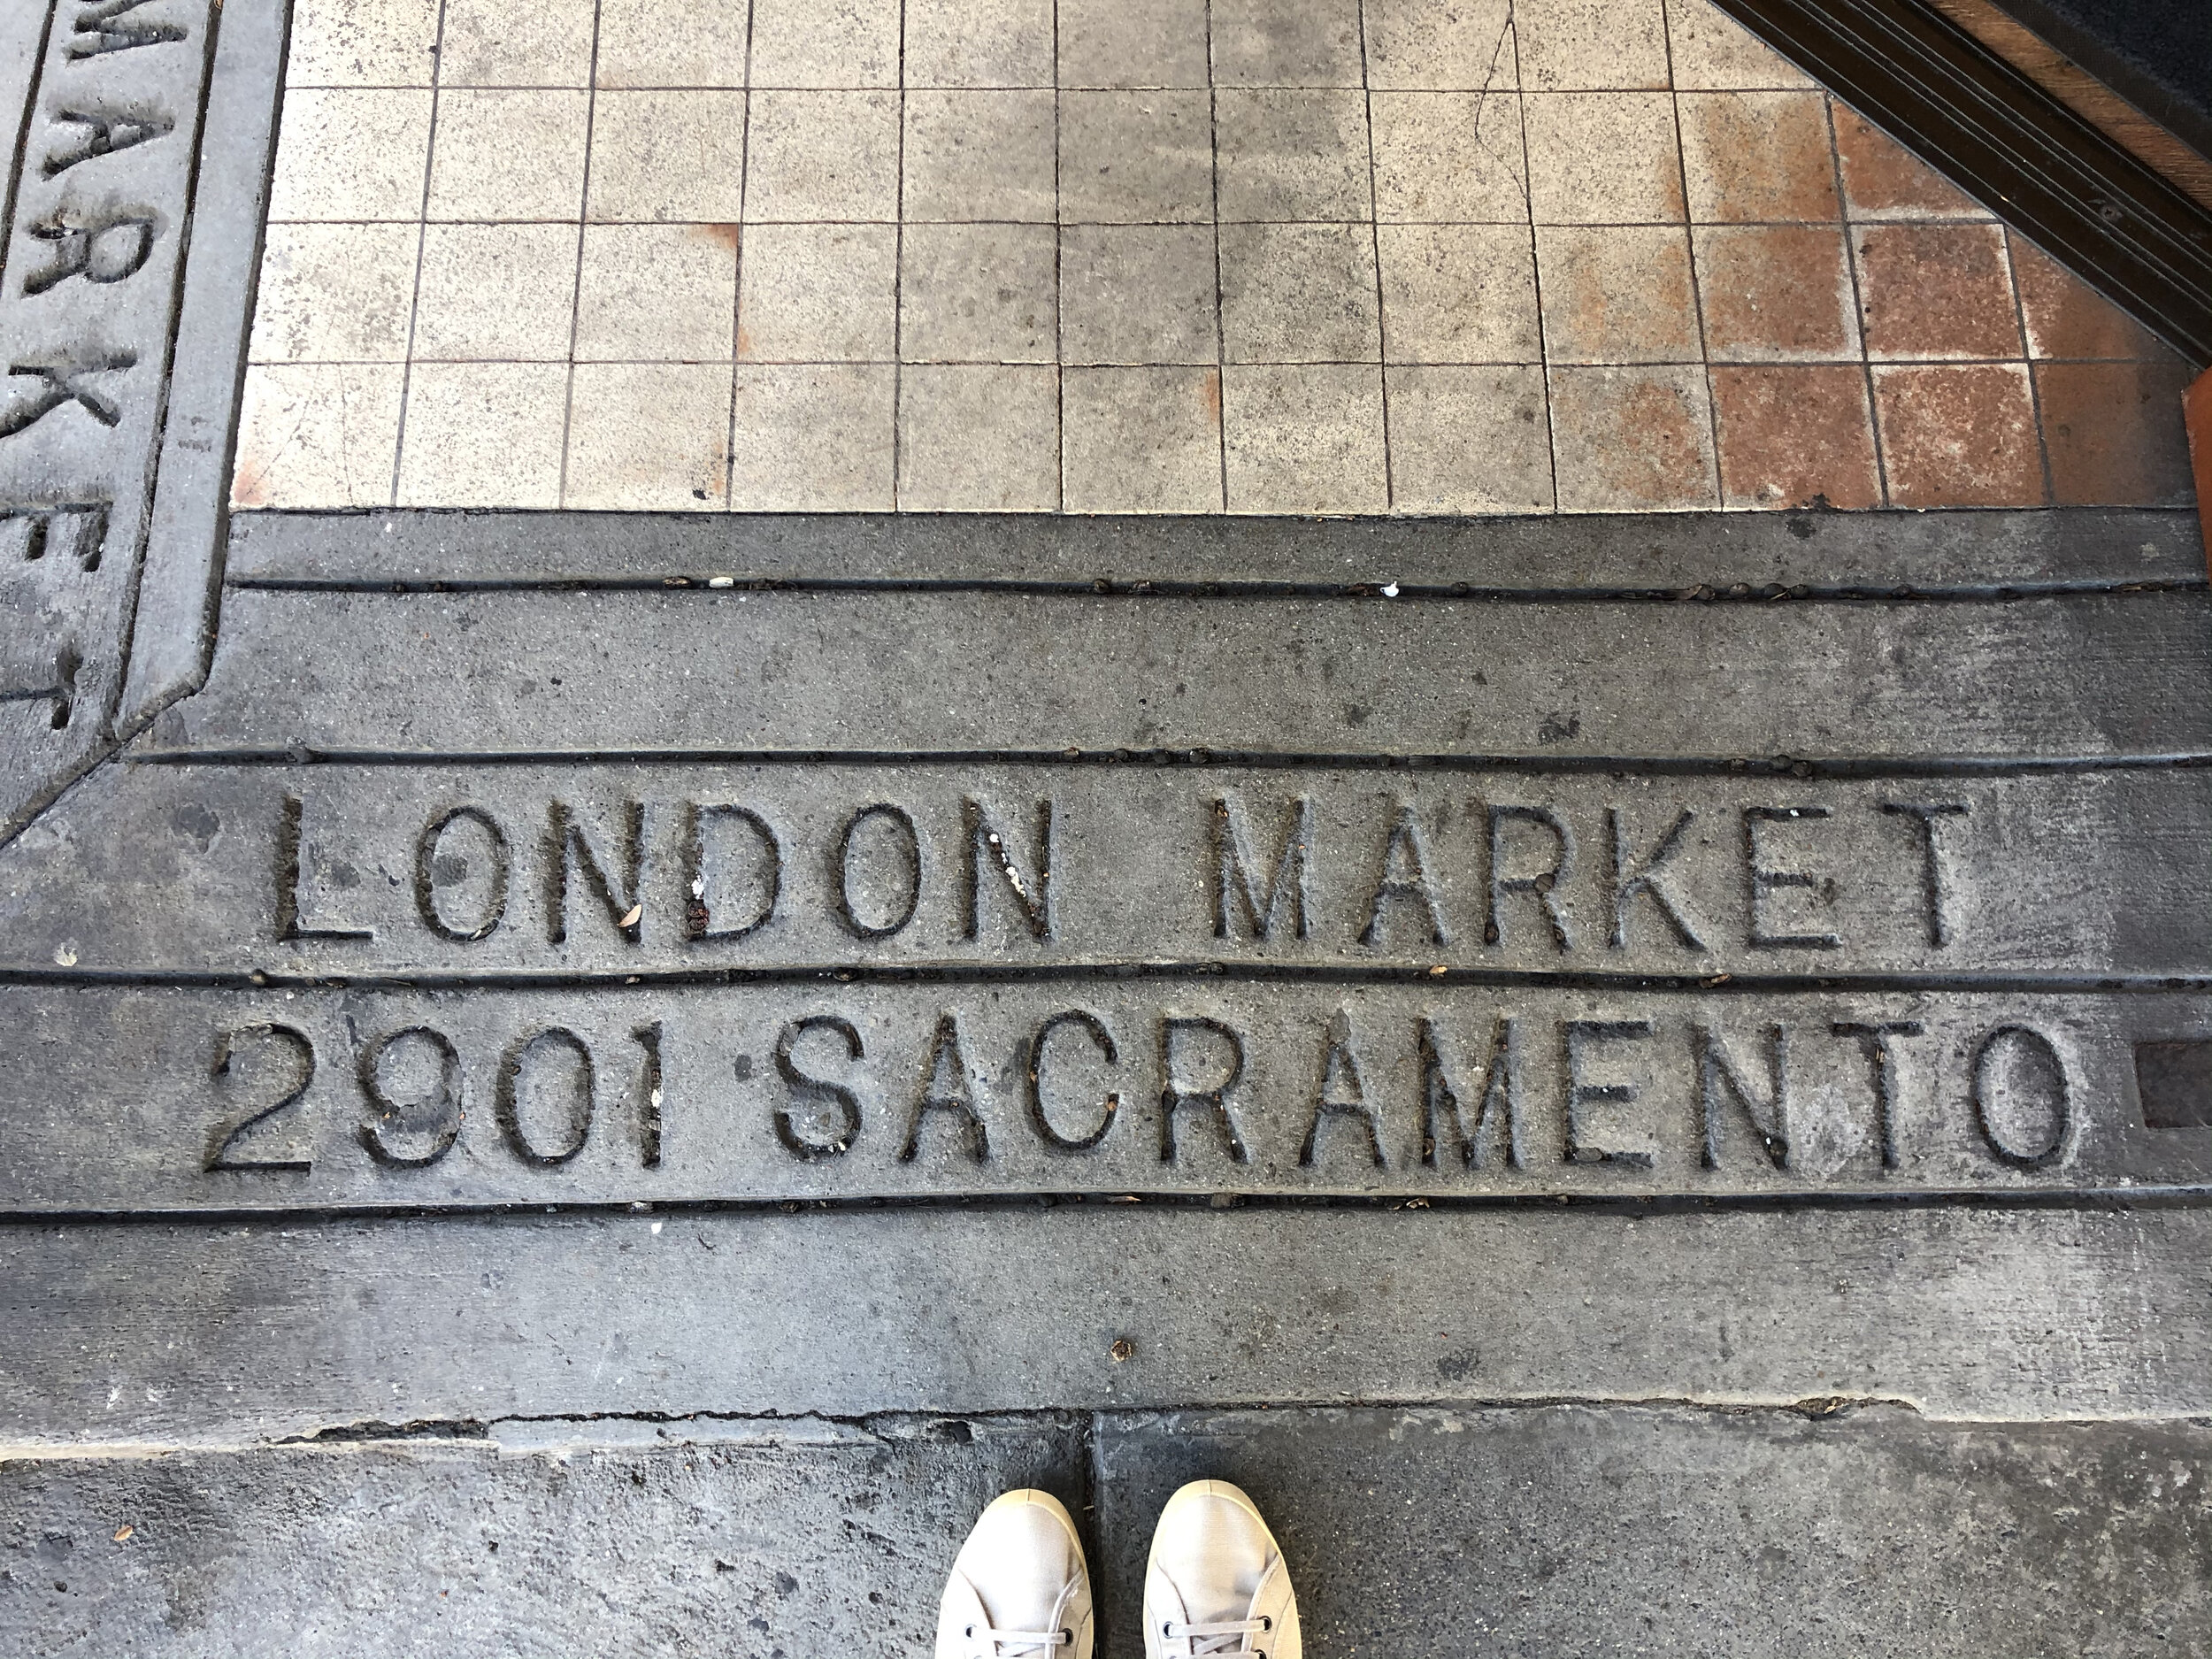 London Market 2 Sacramento and Divisadero.jpg